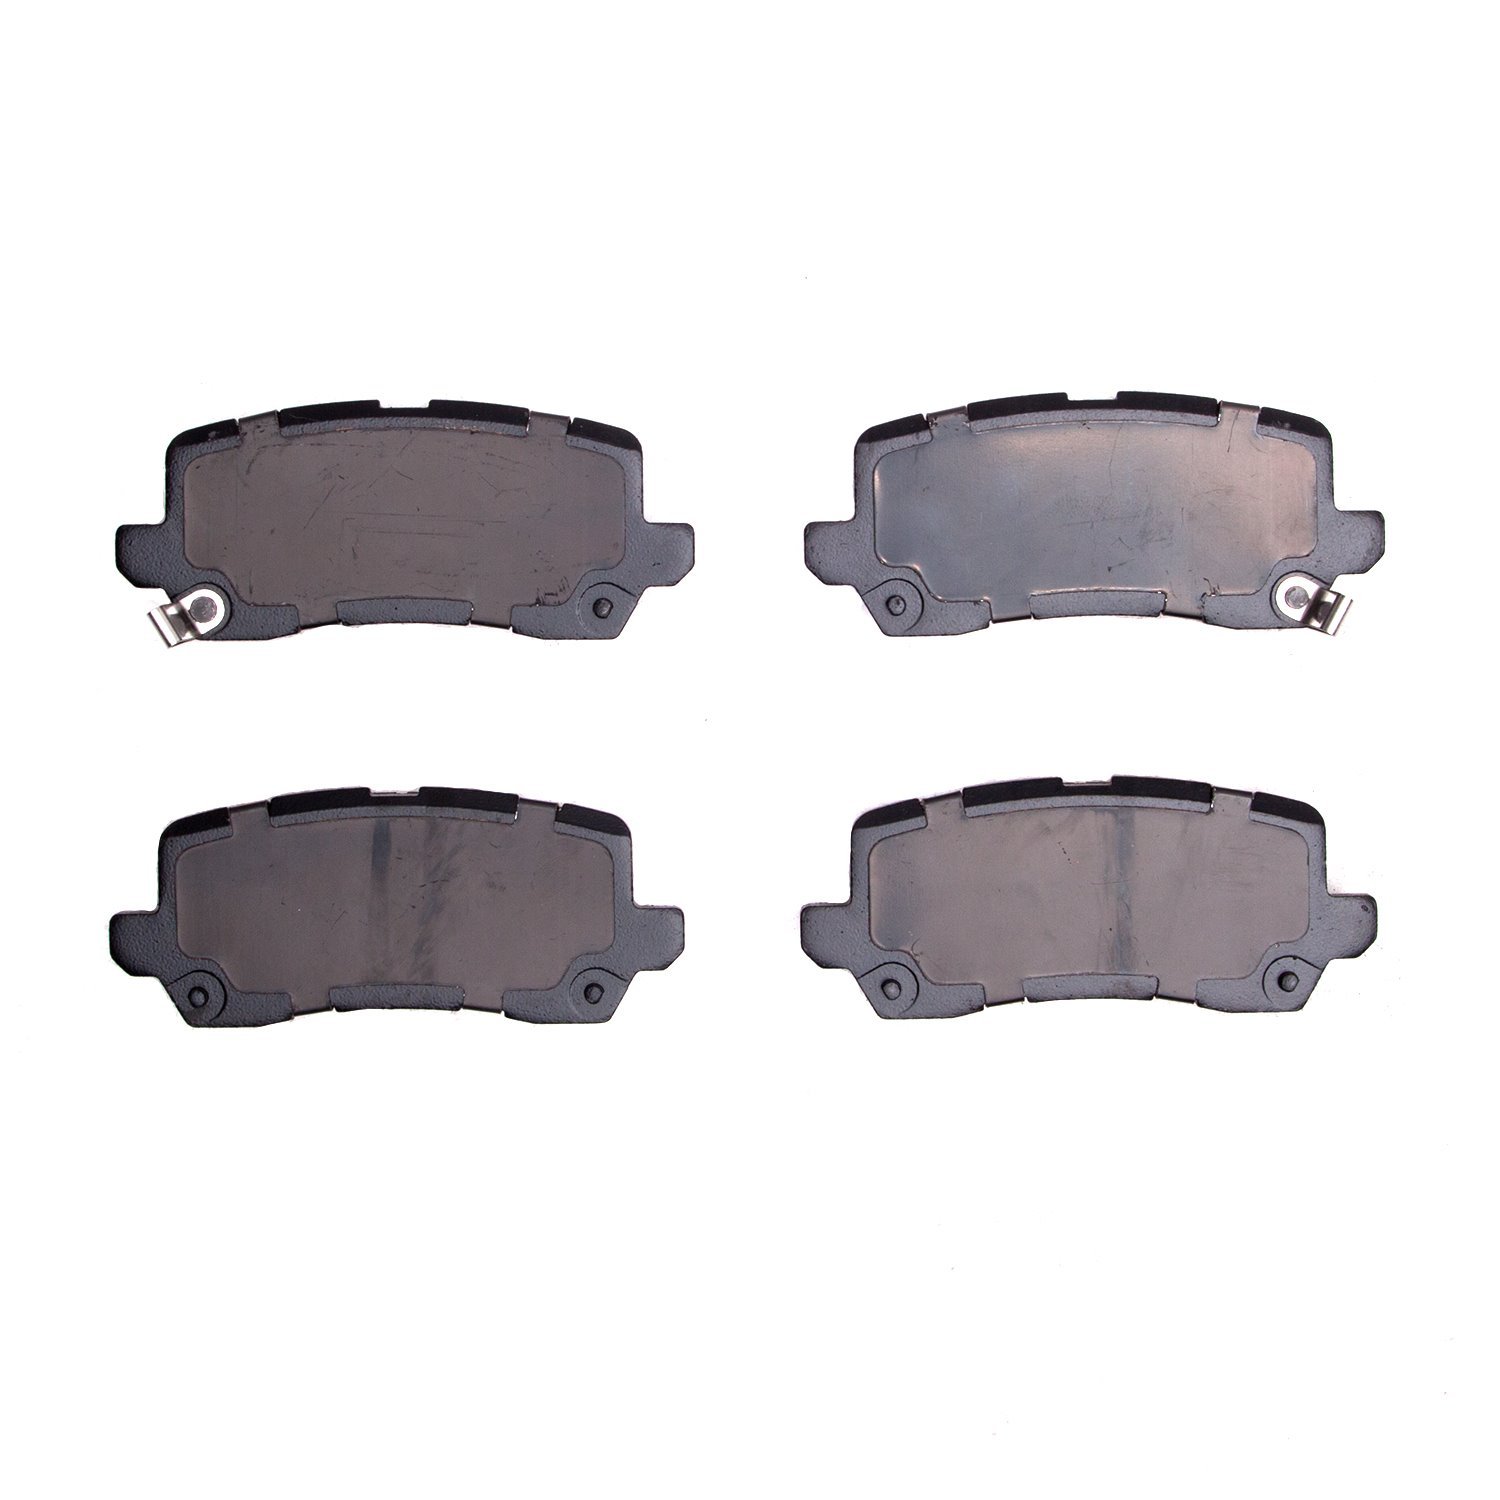 1310-1698-00 3000-Series Ceramic Brake Pads, Fits Select Acura/Honda, Position: Rear